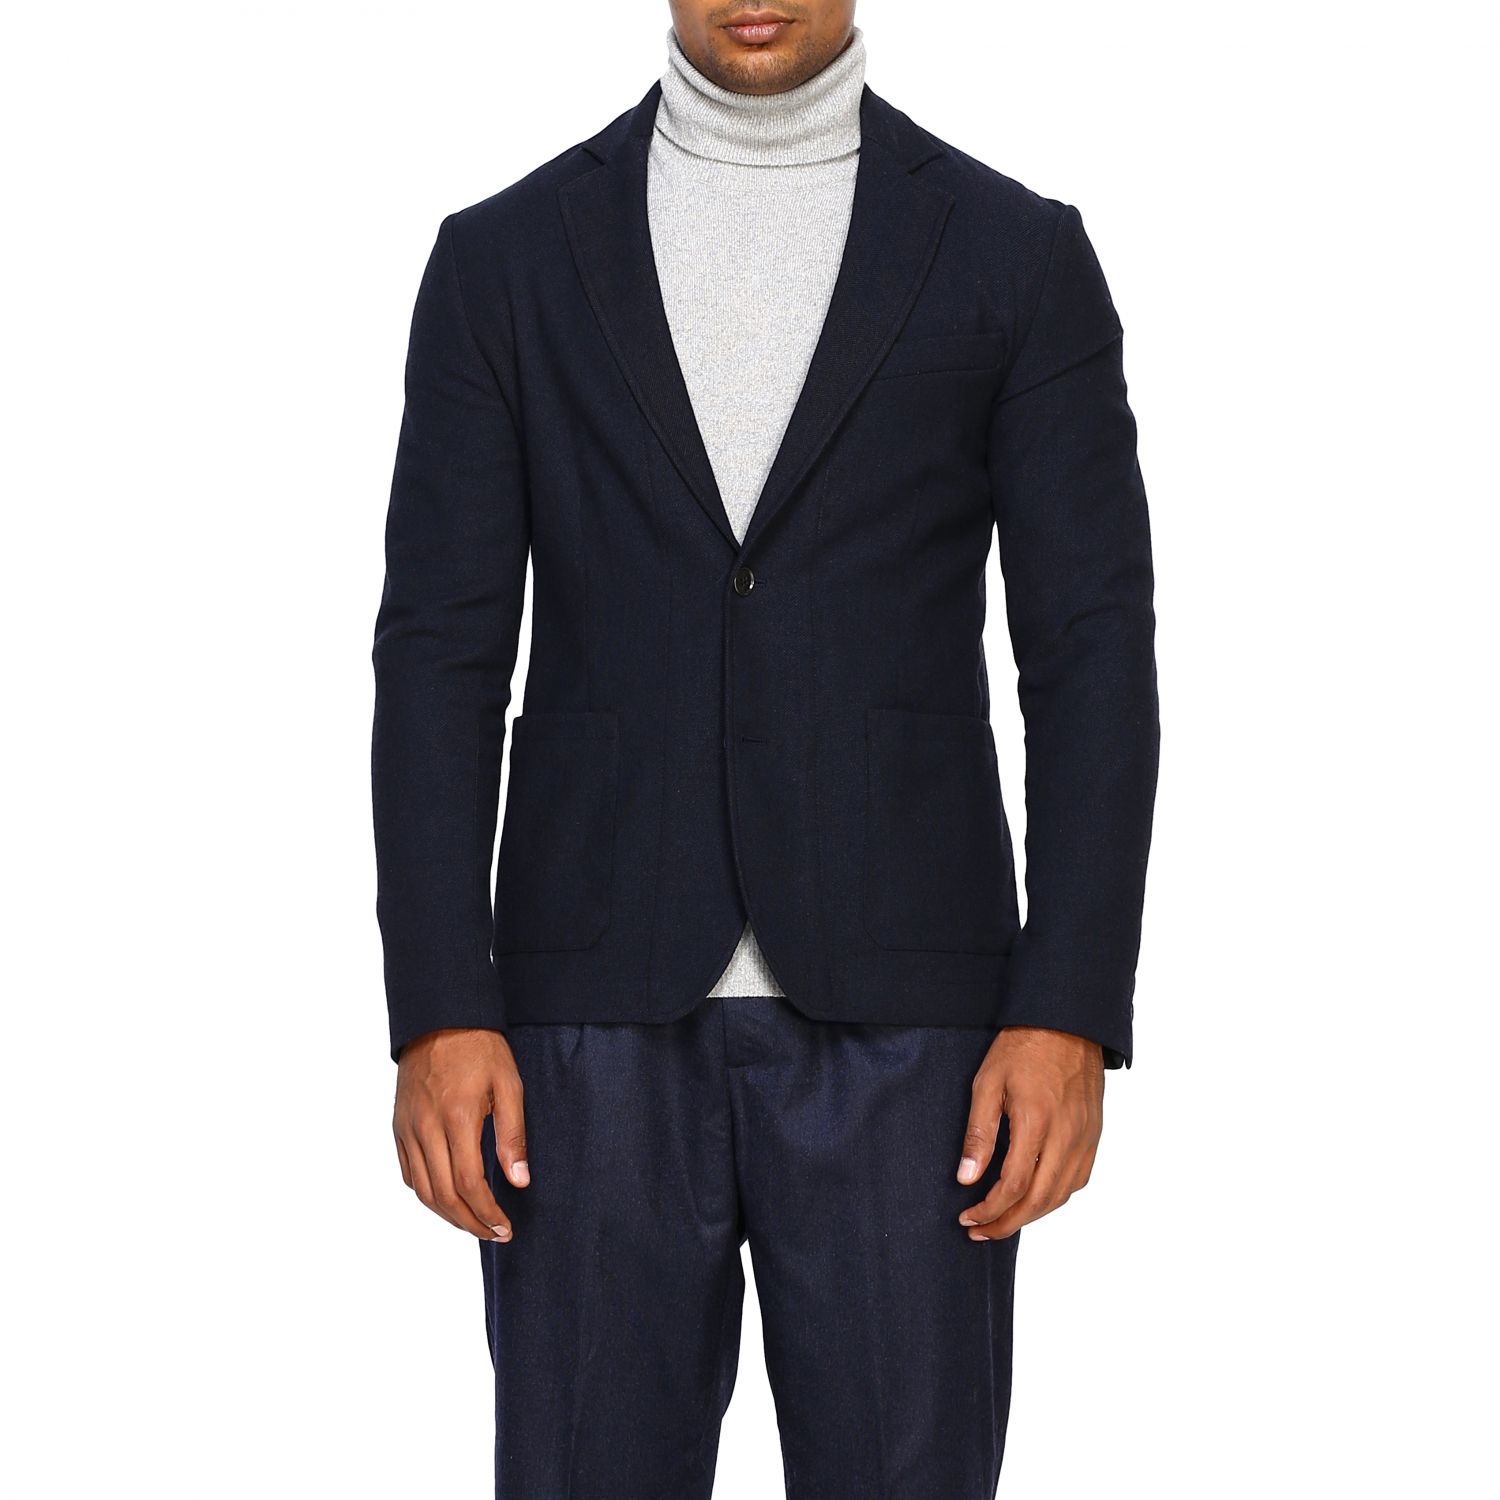 Brooksfield Outlet: blazer for men - Blue | Brooksfield blazer 207G ...